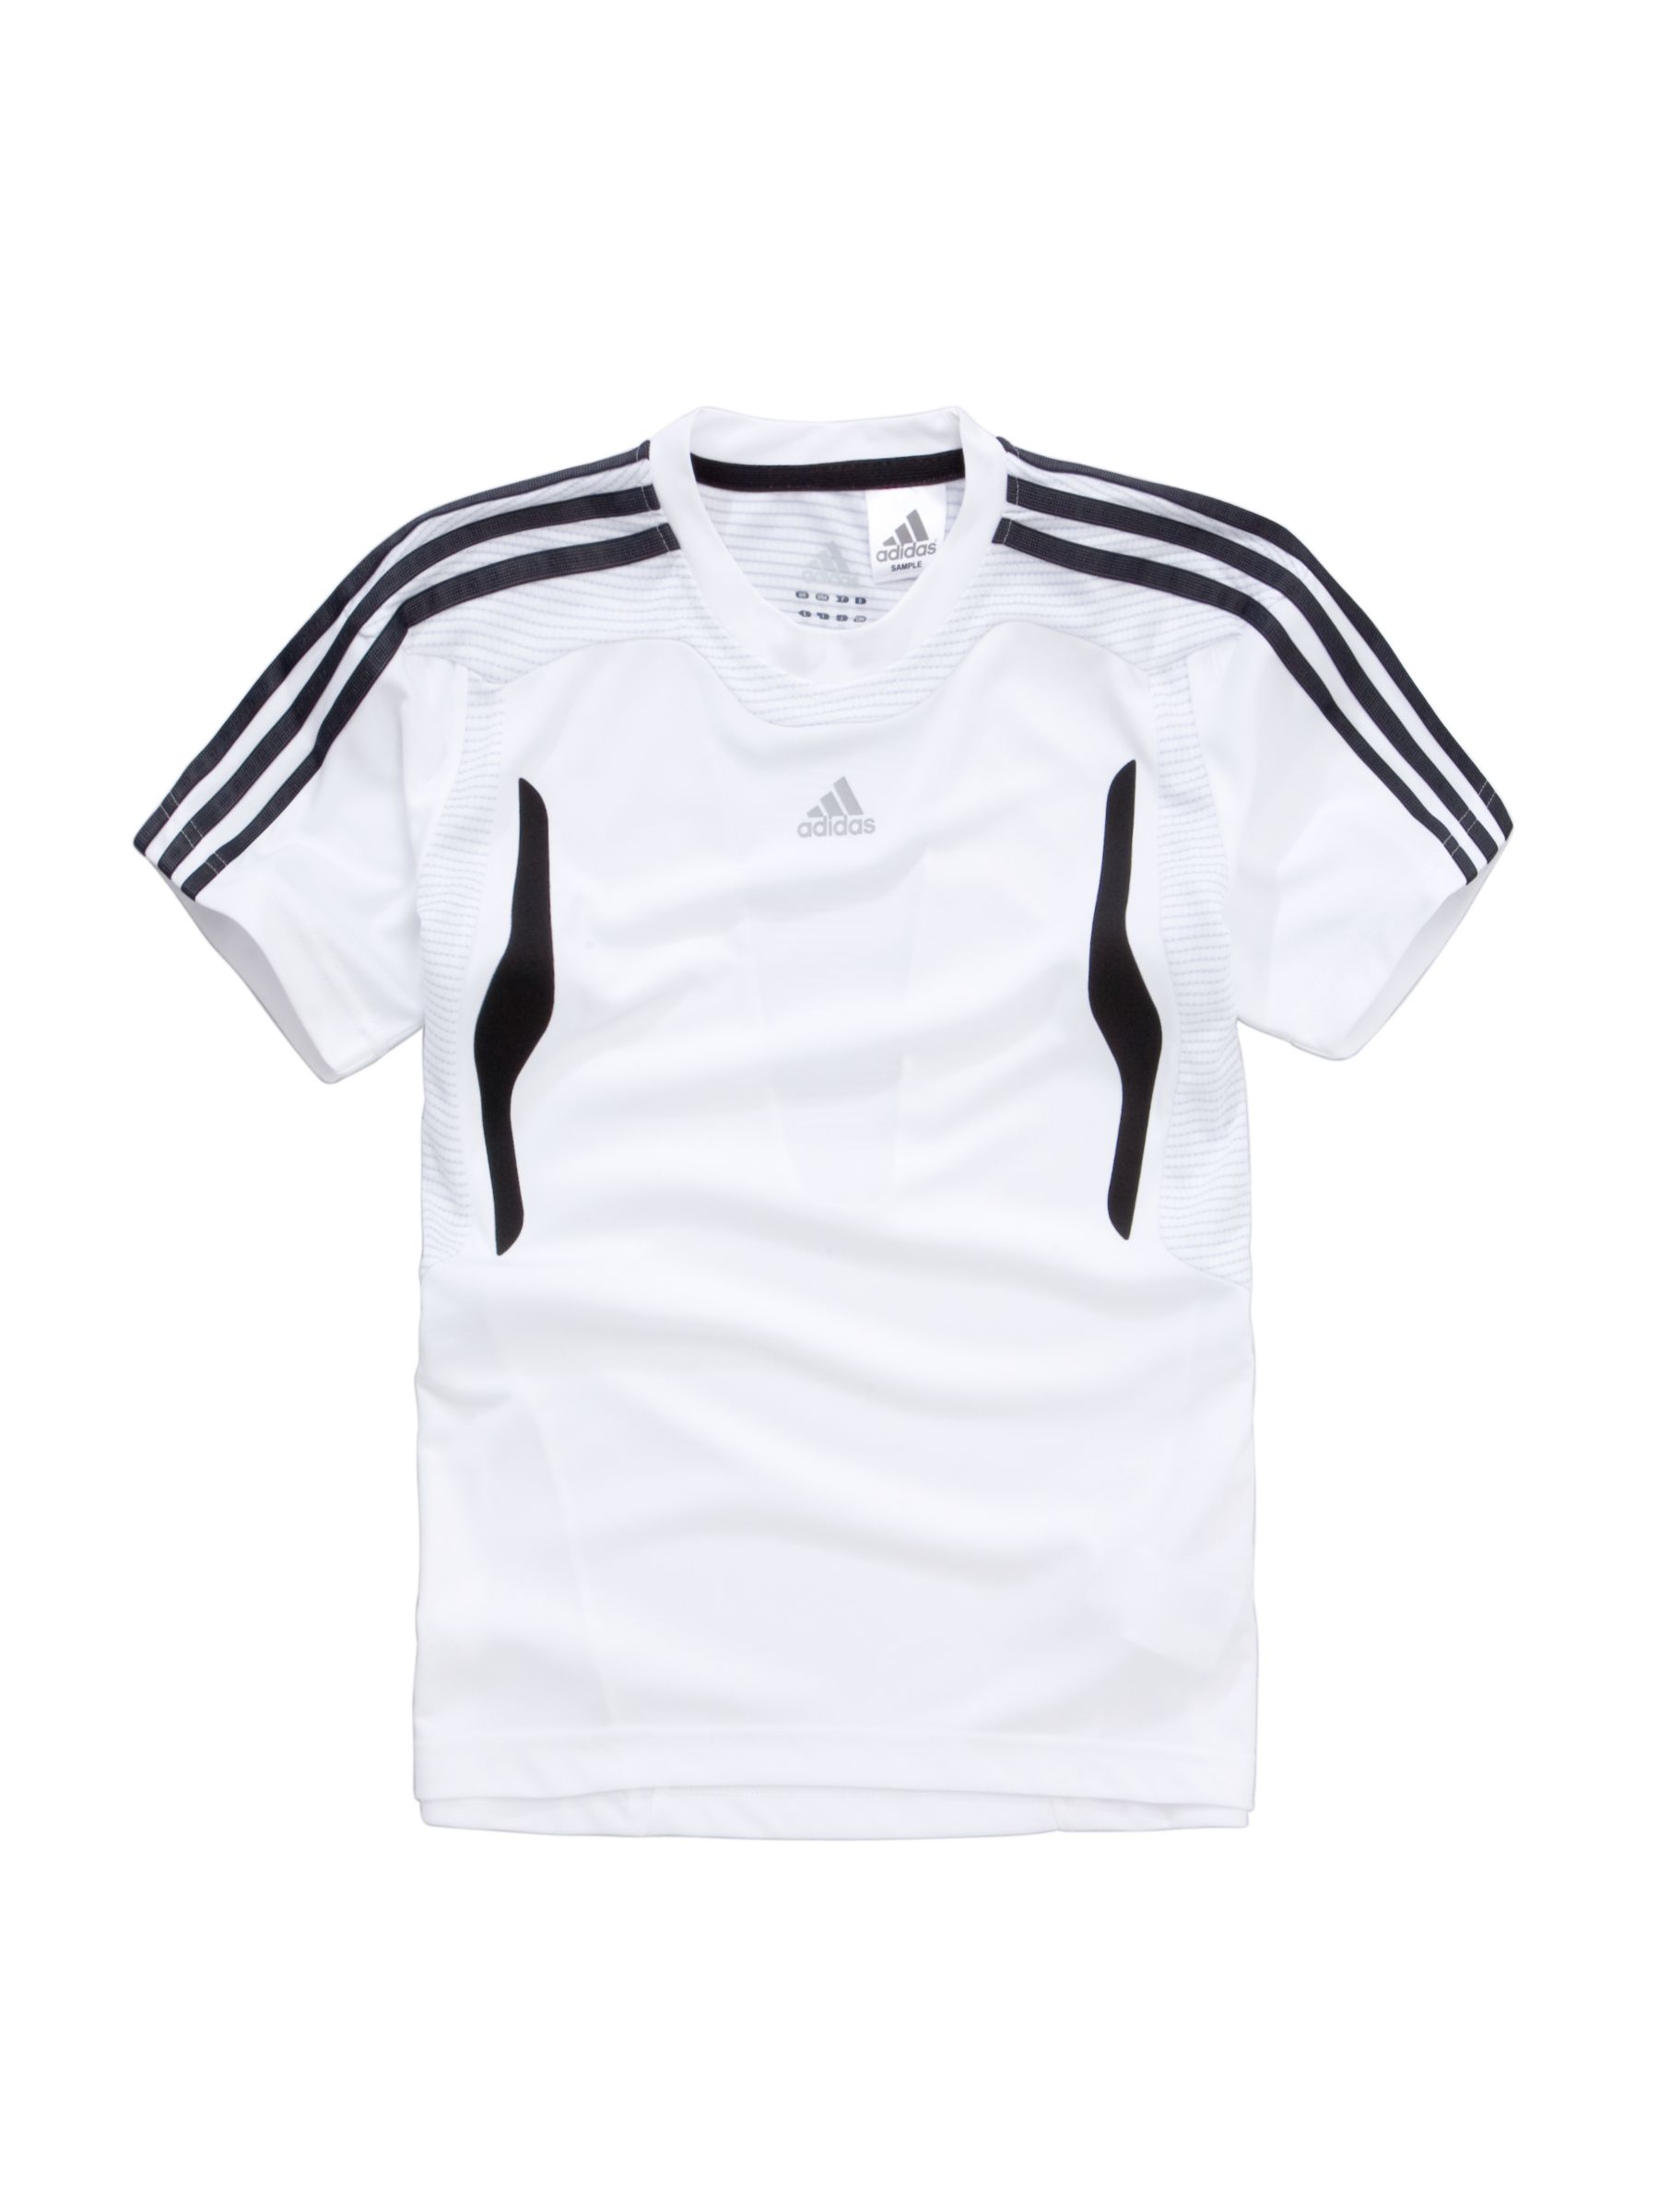 Adidas Clima 365 T-Shirt, White